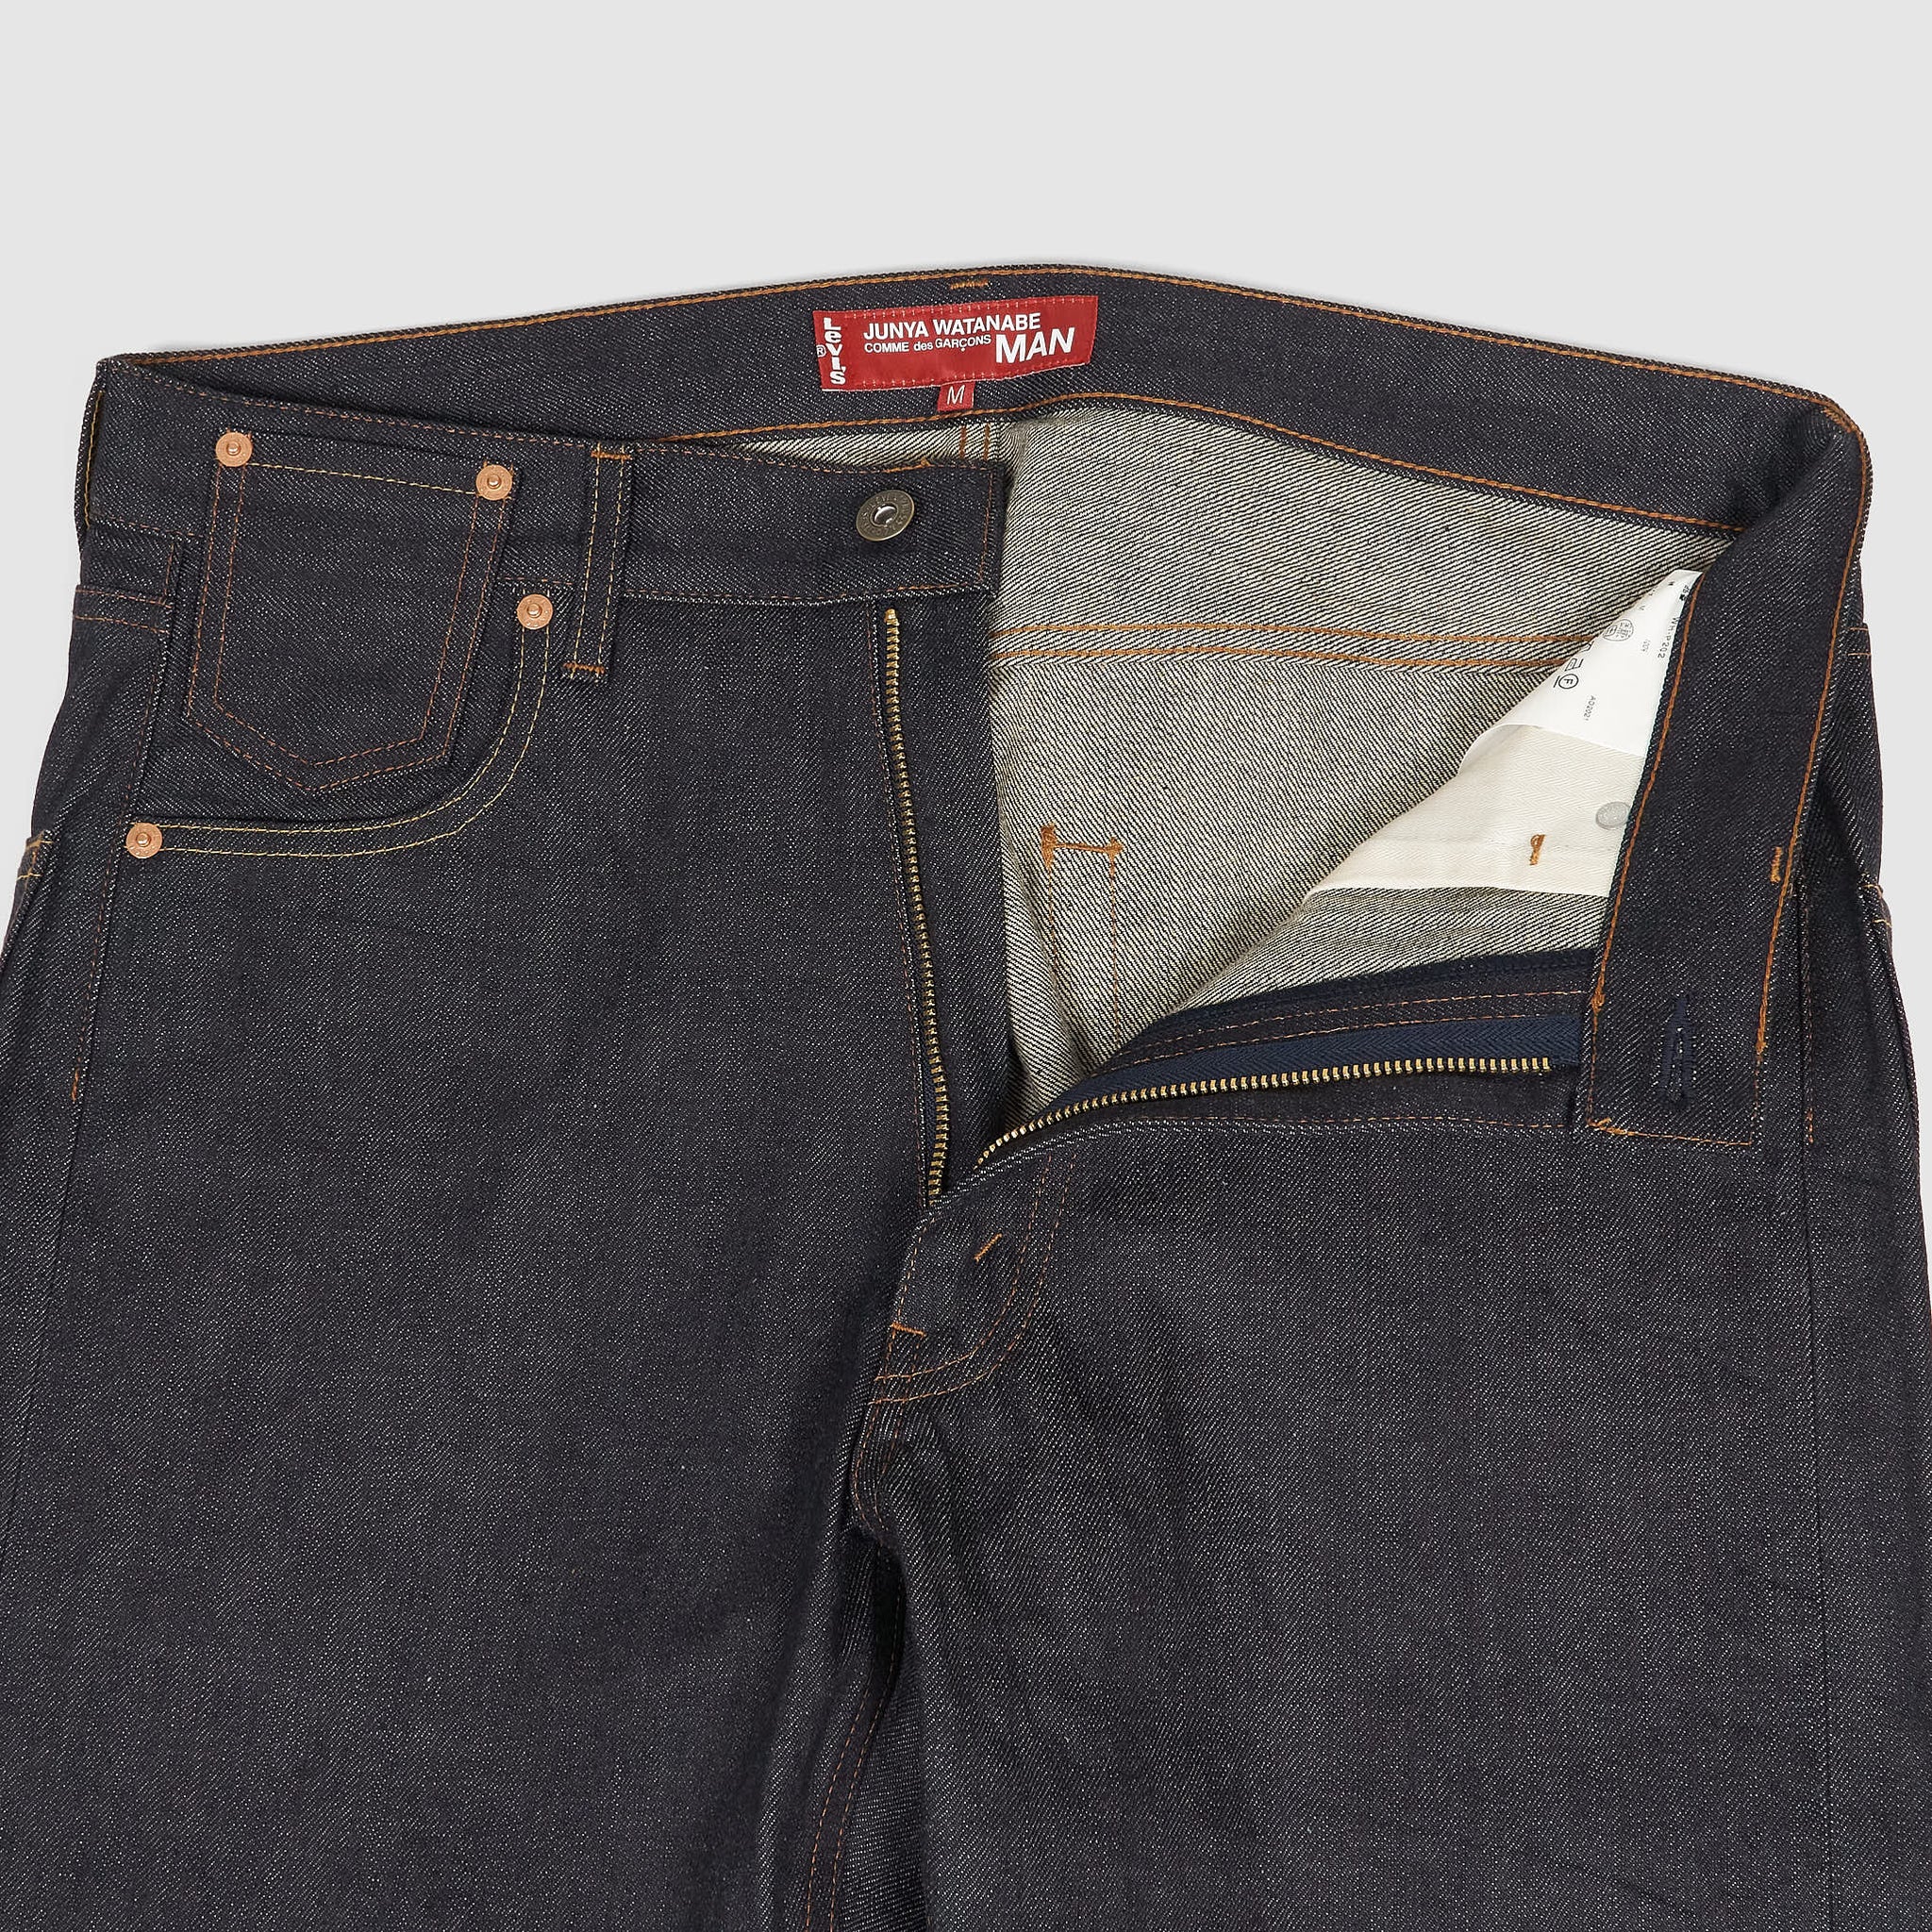 Junya Watanabe Man x Levi's® 5-Pocket Selvage Jeans - DeeCee style